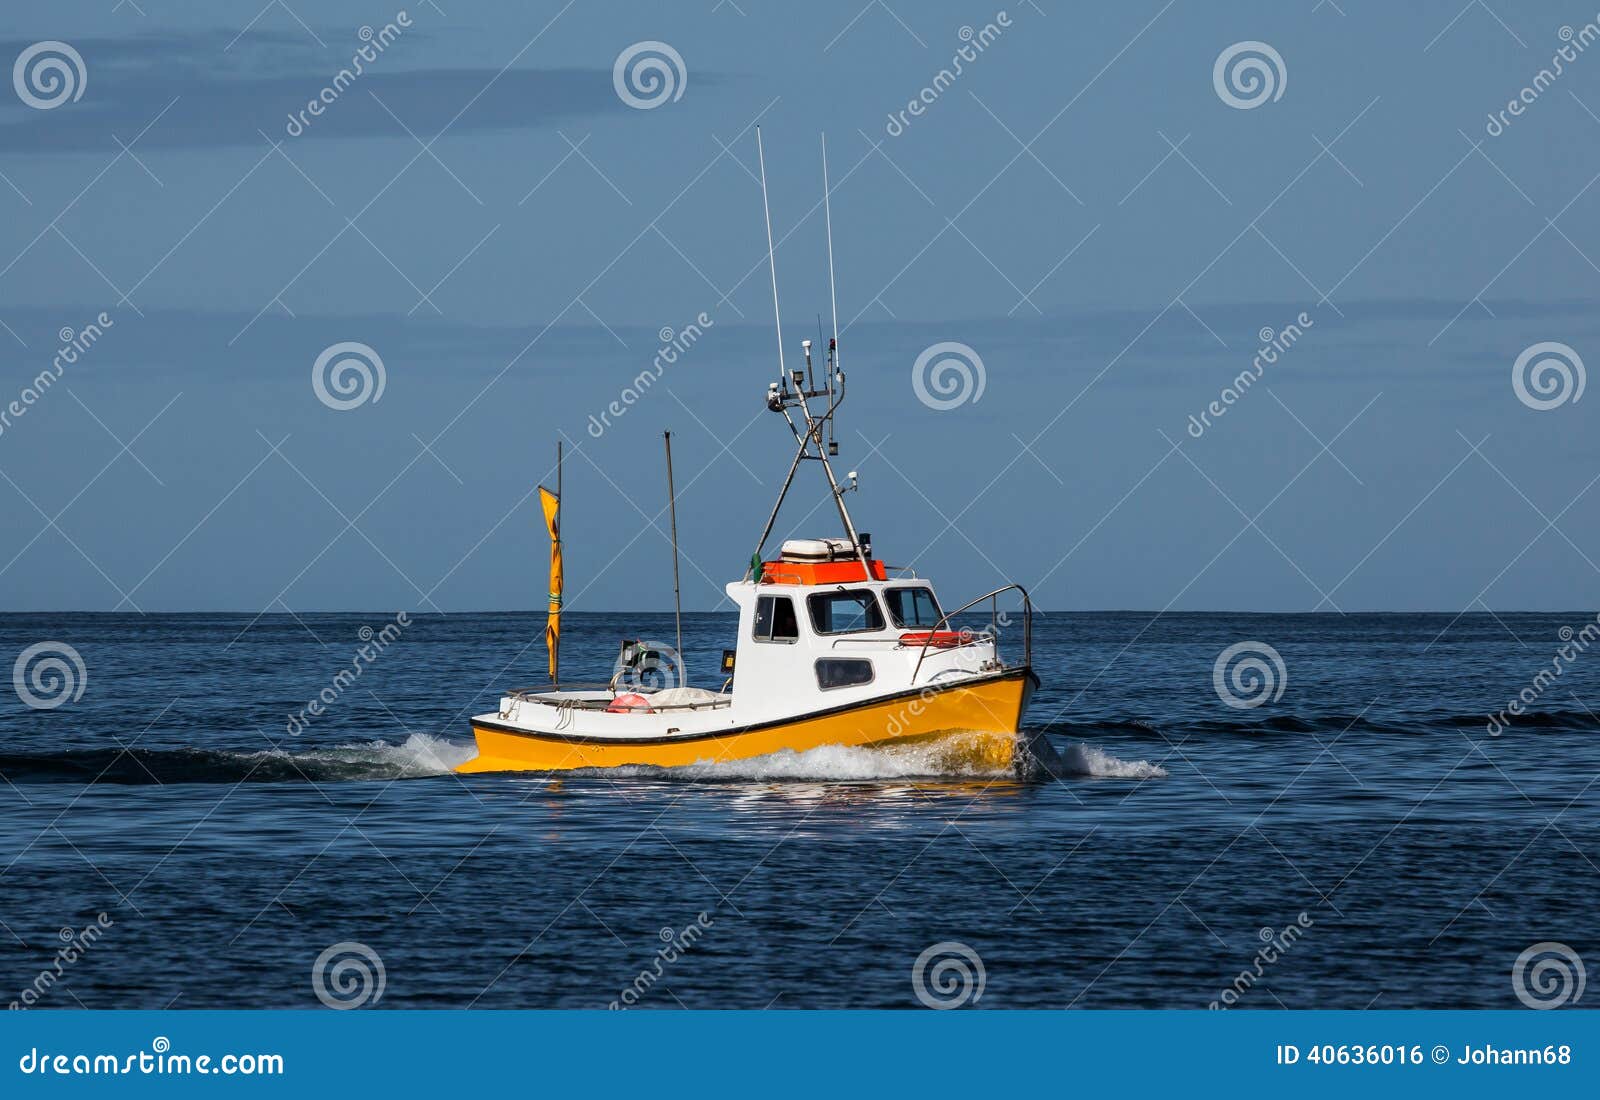 Small Fishing Boat Stock Photo - Image: 40636016